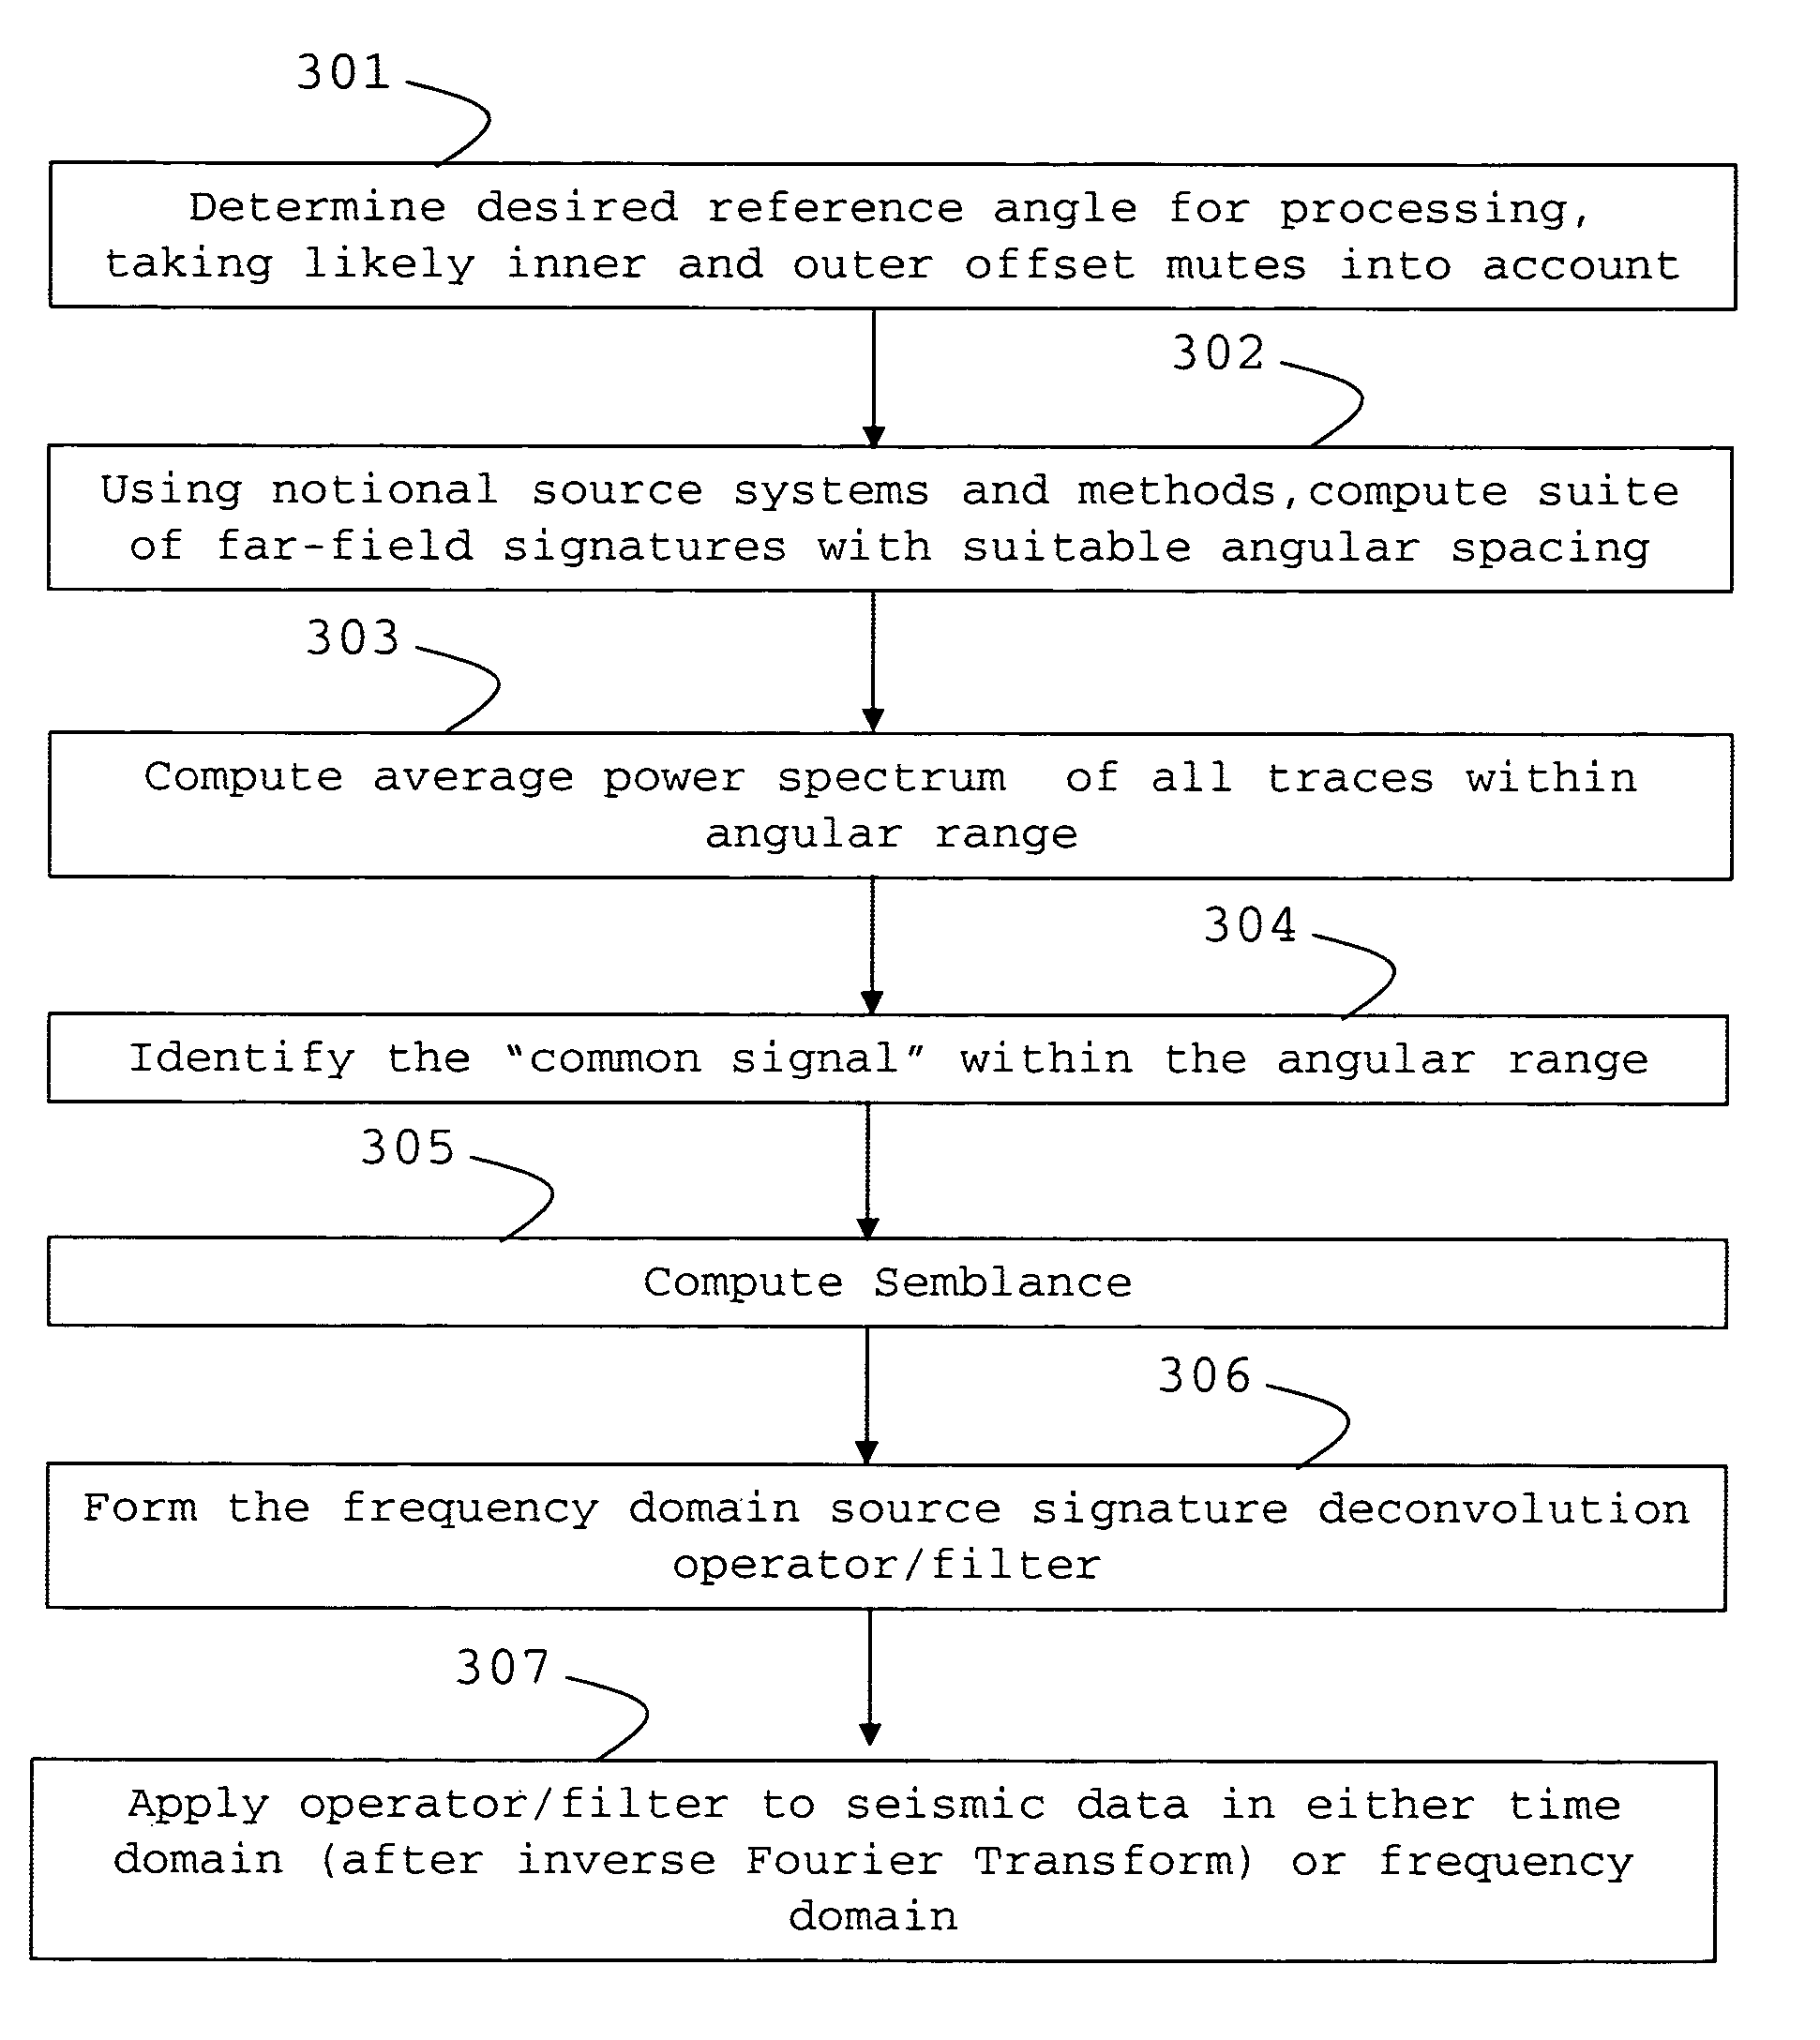 Source signature deconvolution method